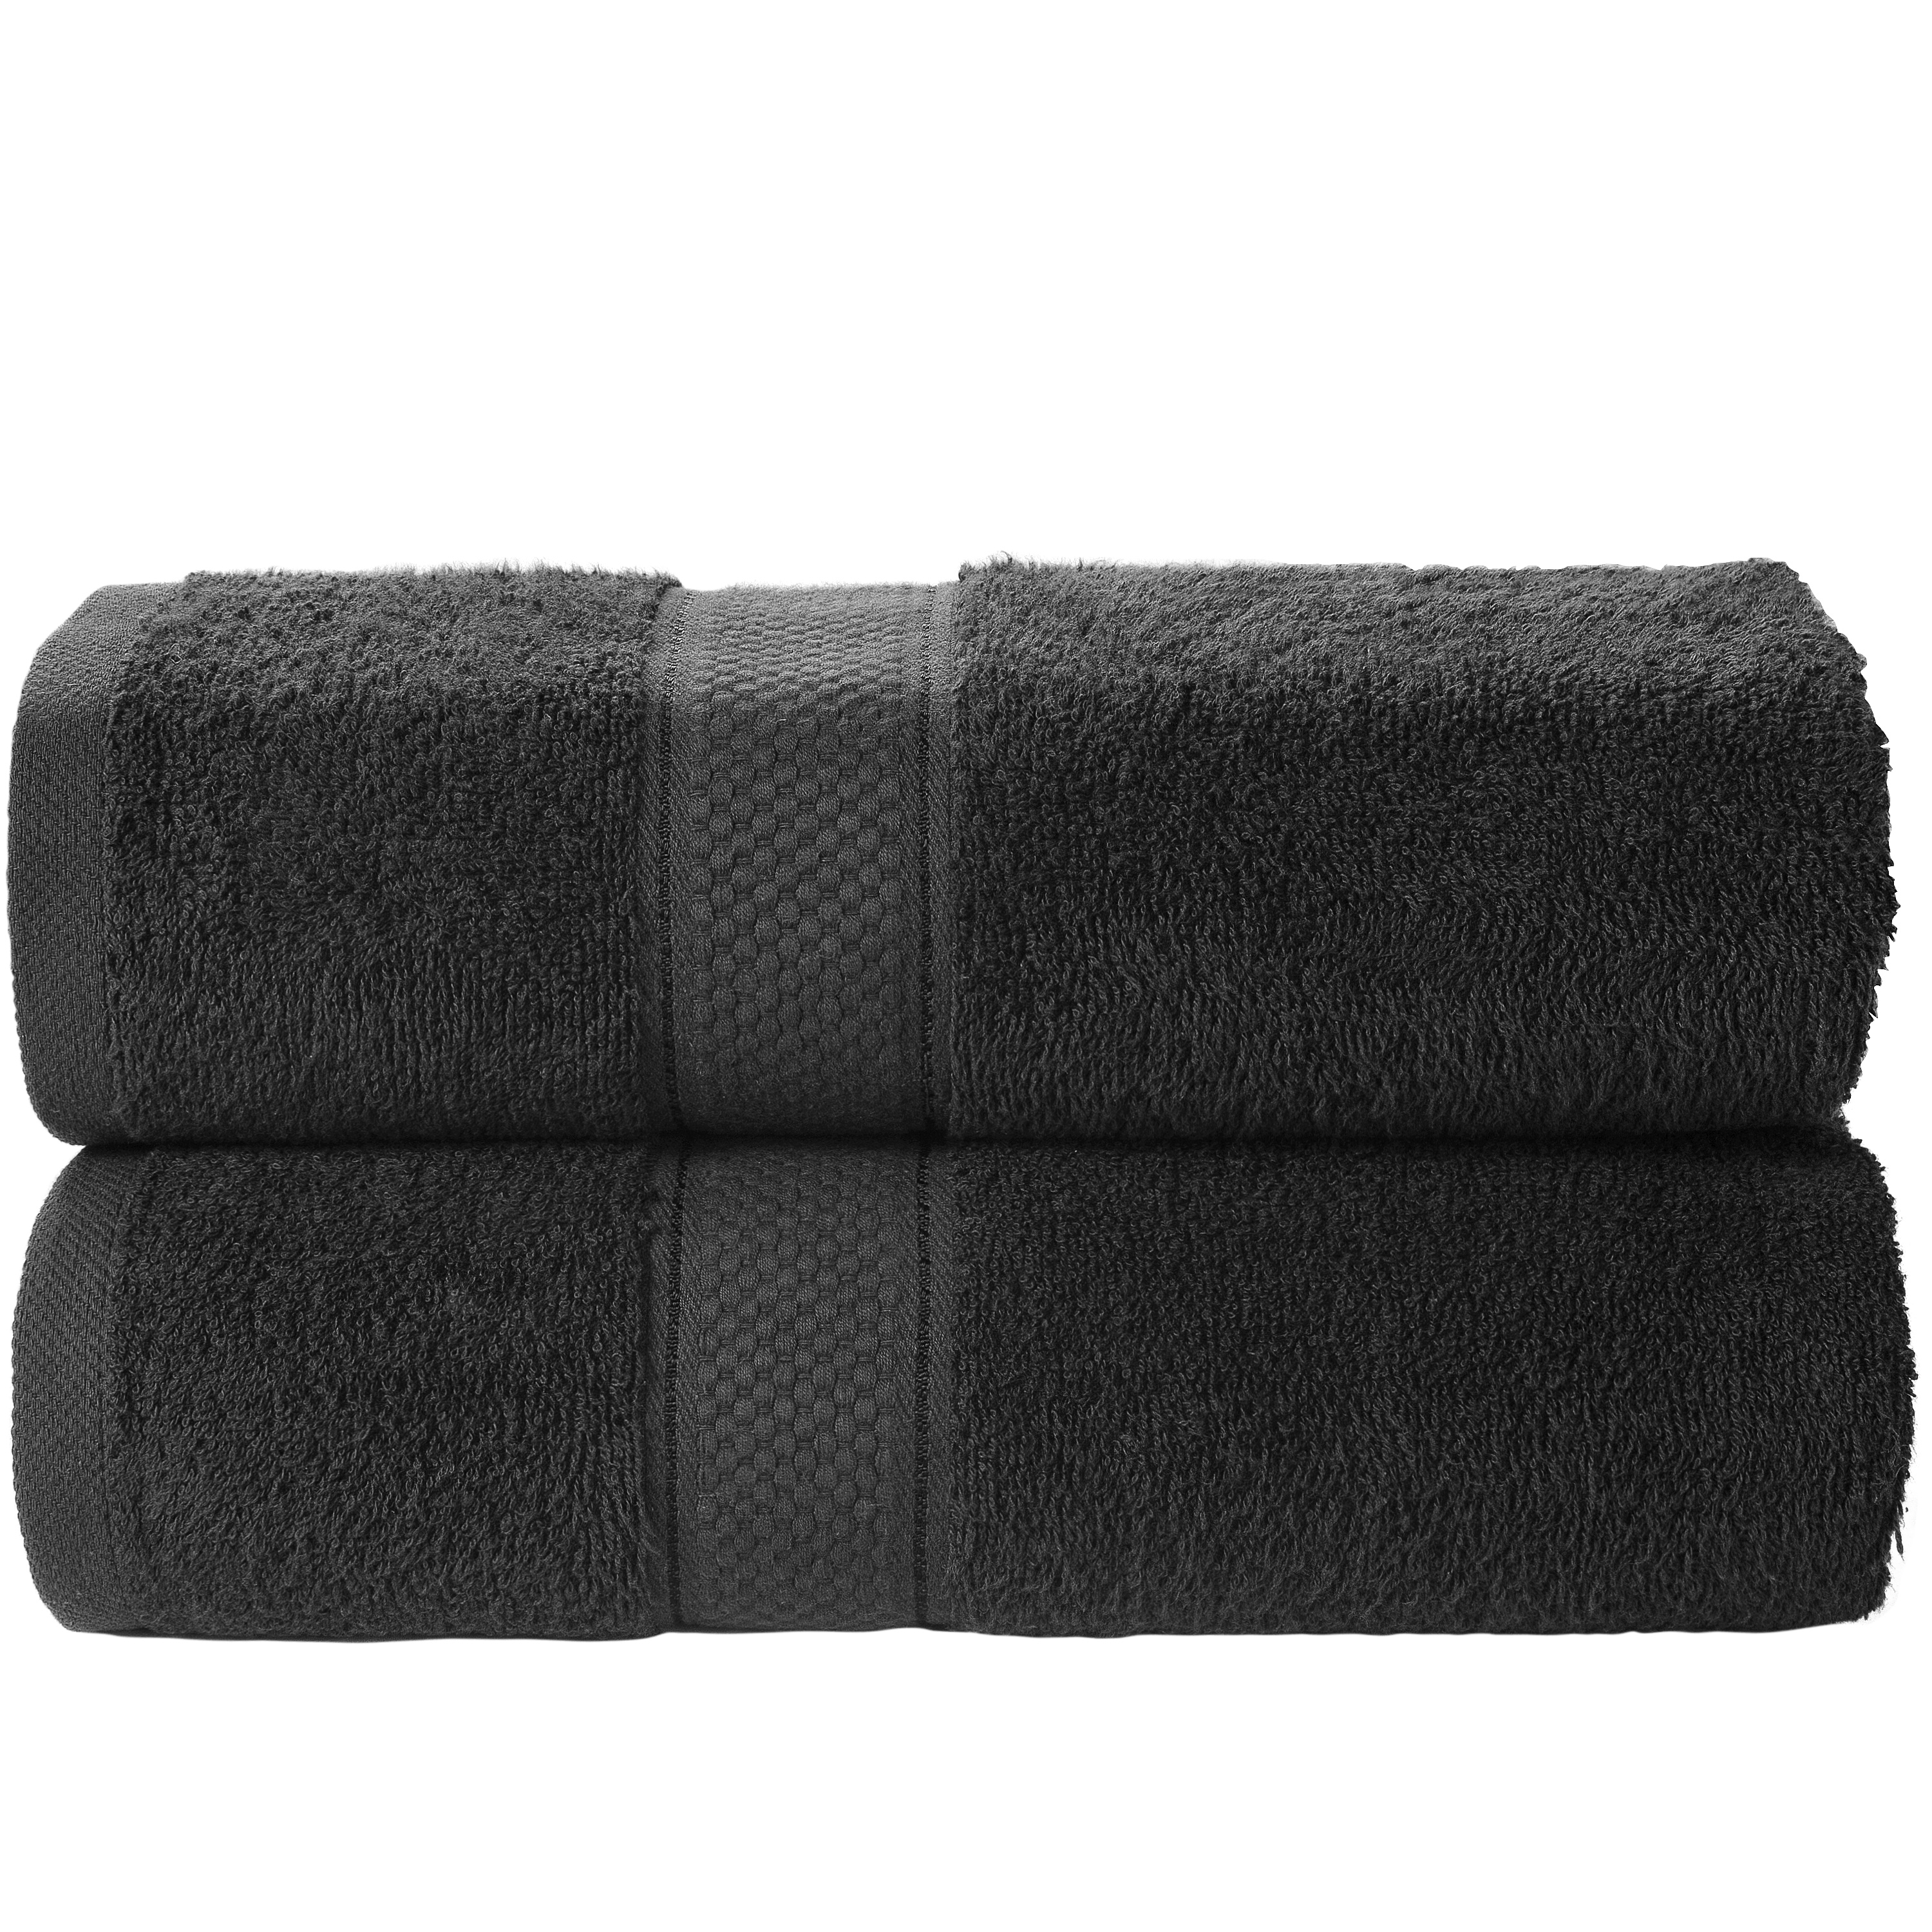 2 Pcs 100 % Cotton Premium Bath Sheet Towel Bale Set Black Plain